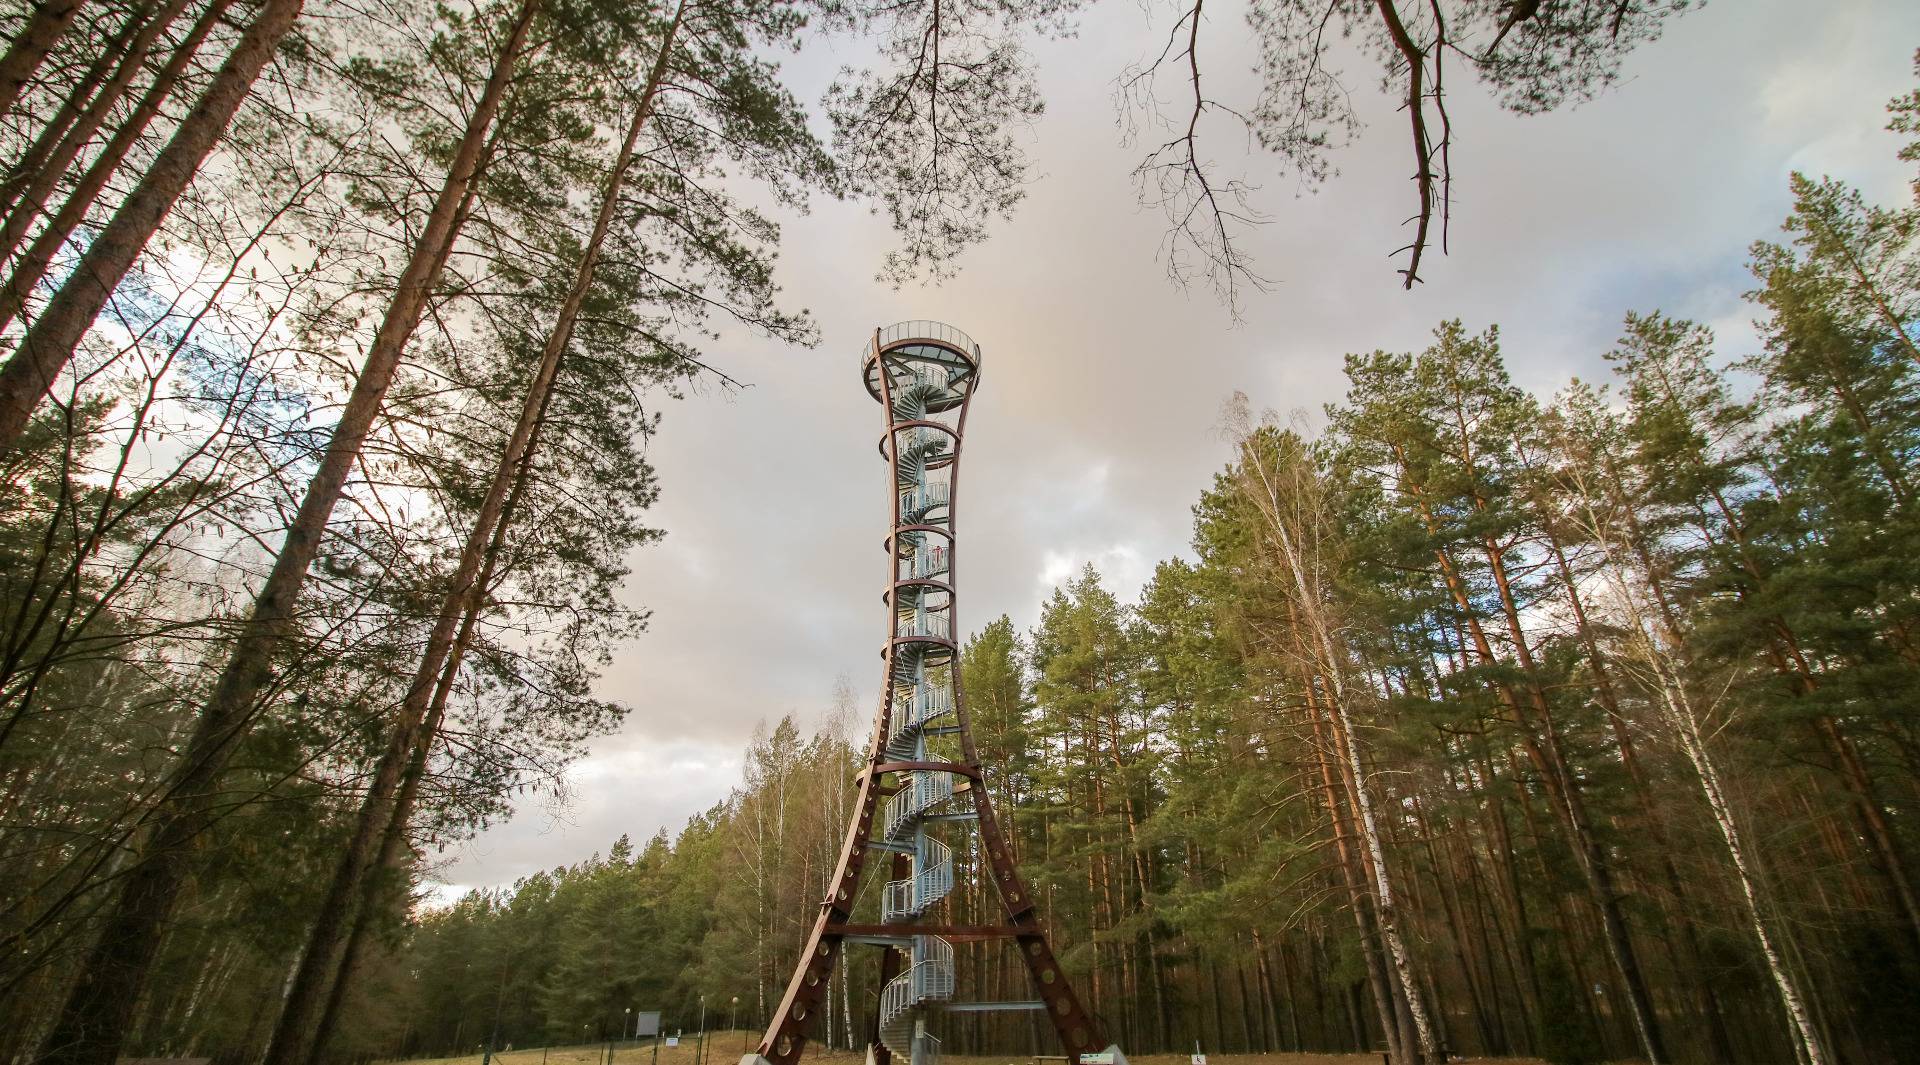 Mindūnai observation tower